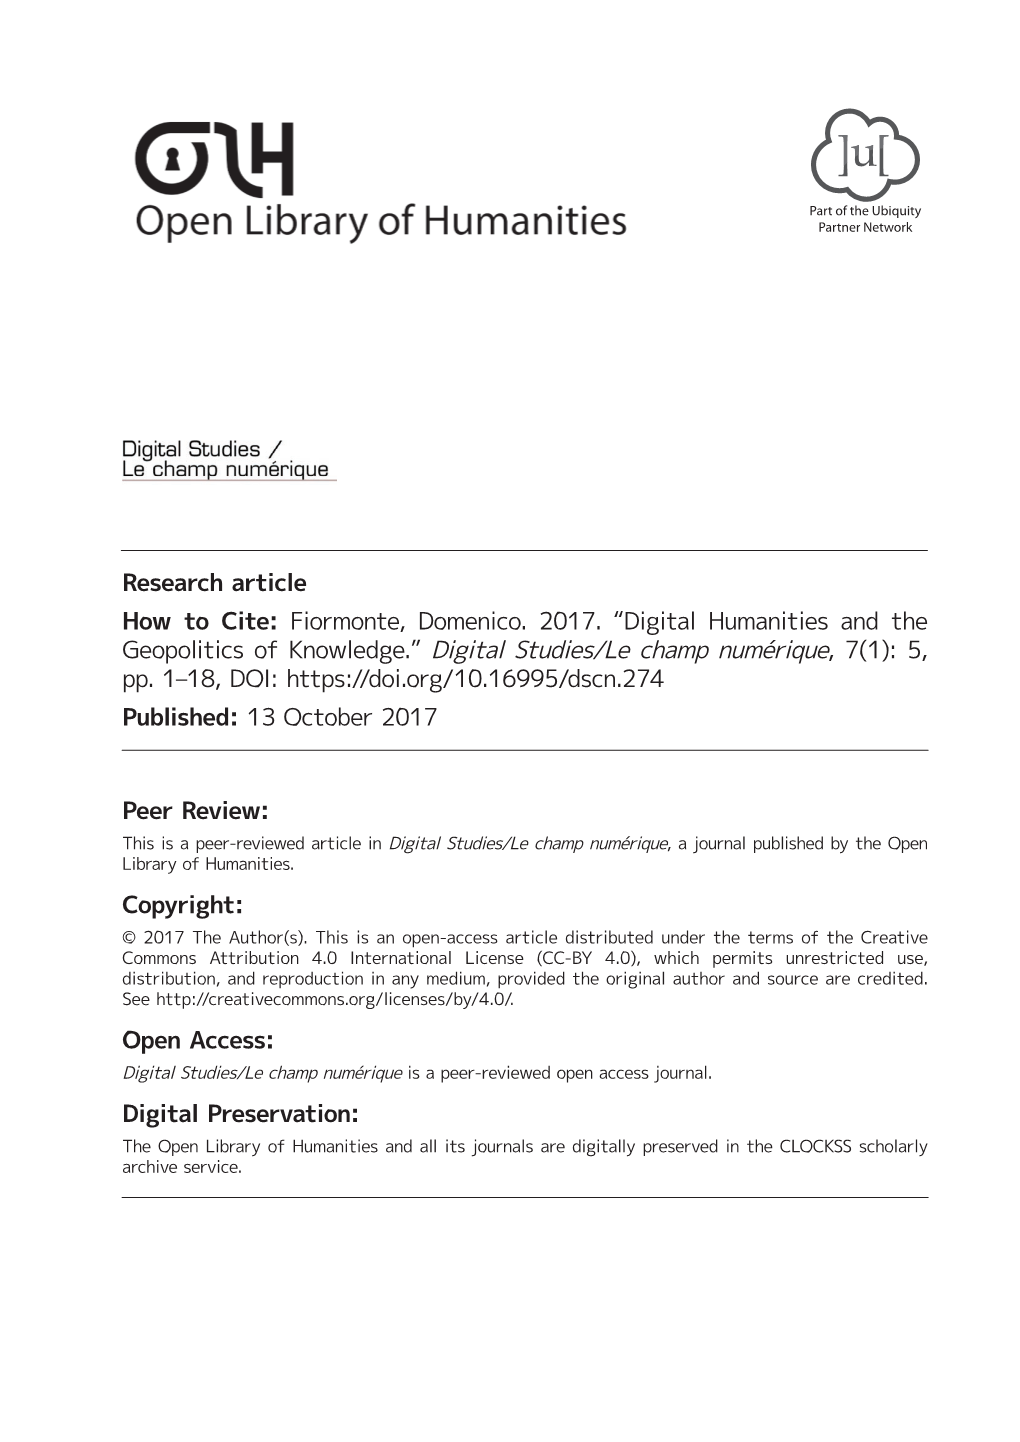 Digital Humanities and the Geopolitics of Knowledge.” Digital Studies/Le Champ Numérique, 7(1): 5, Pp